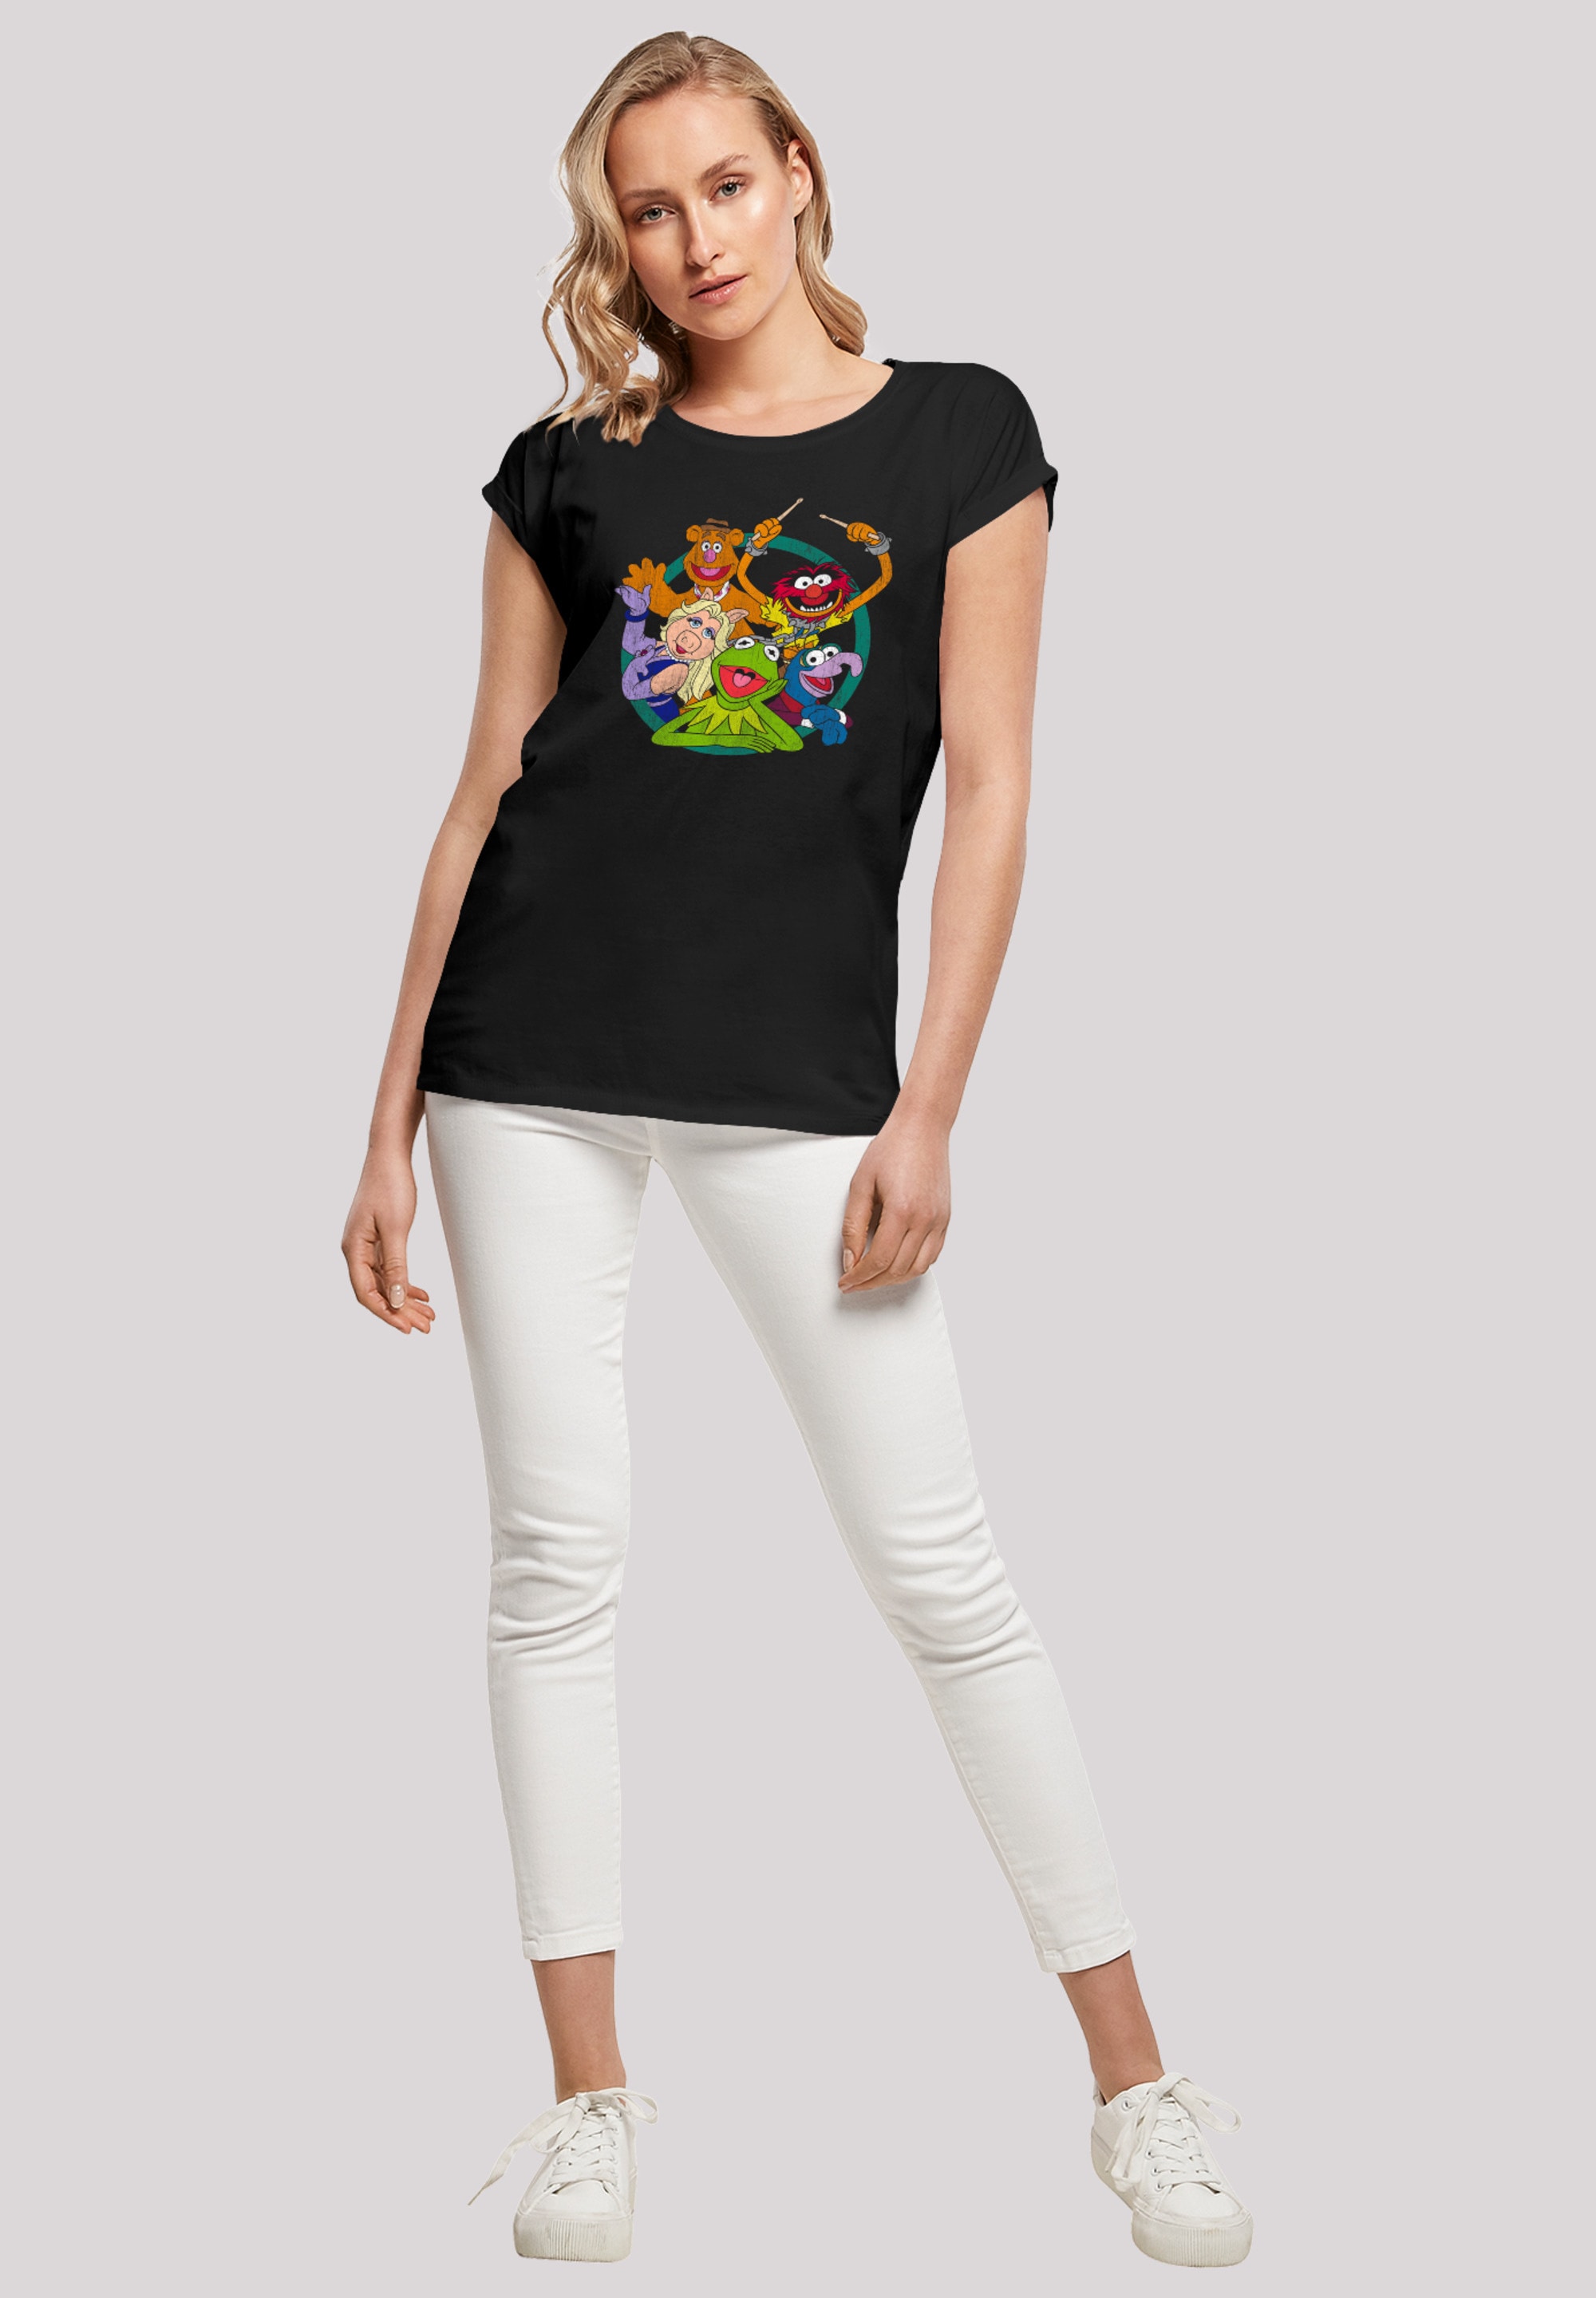 Die Muppets F4NT4STIC Group Print »Disney Circle«, online T-Shirt